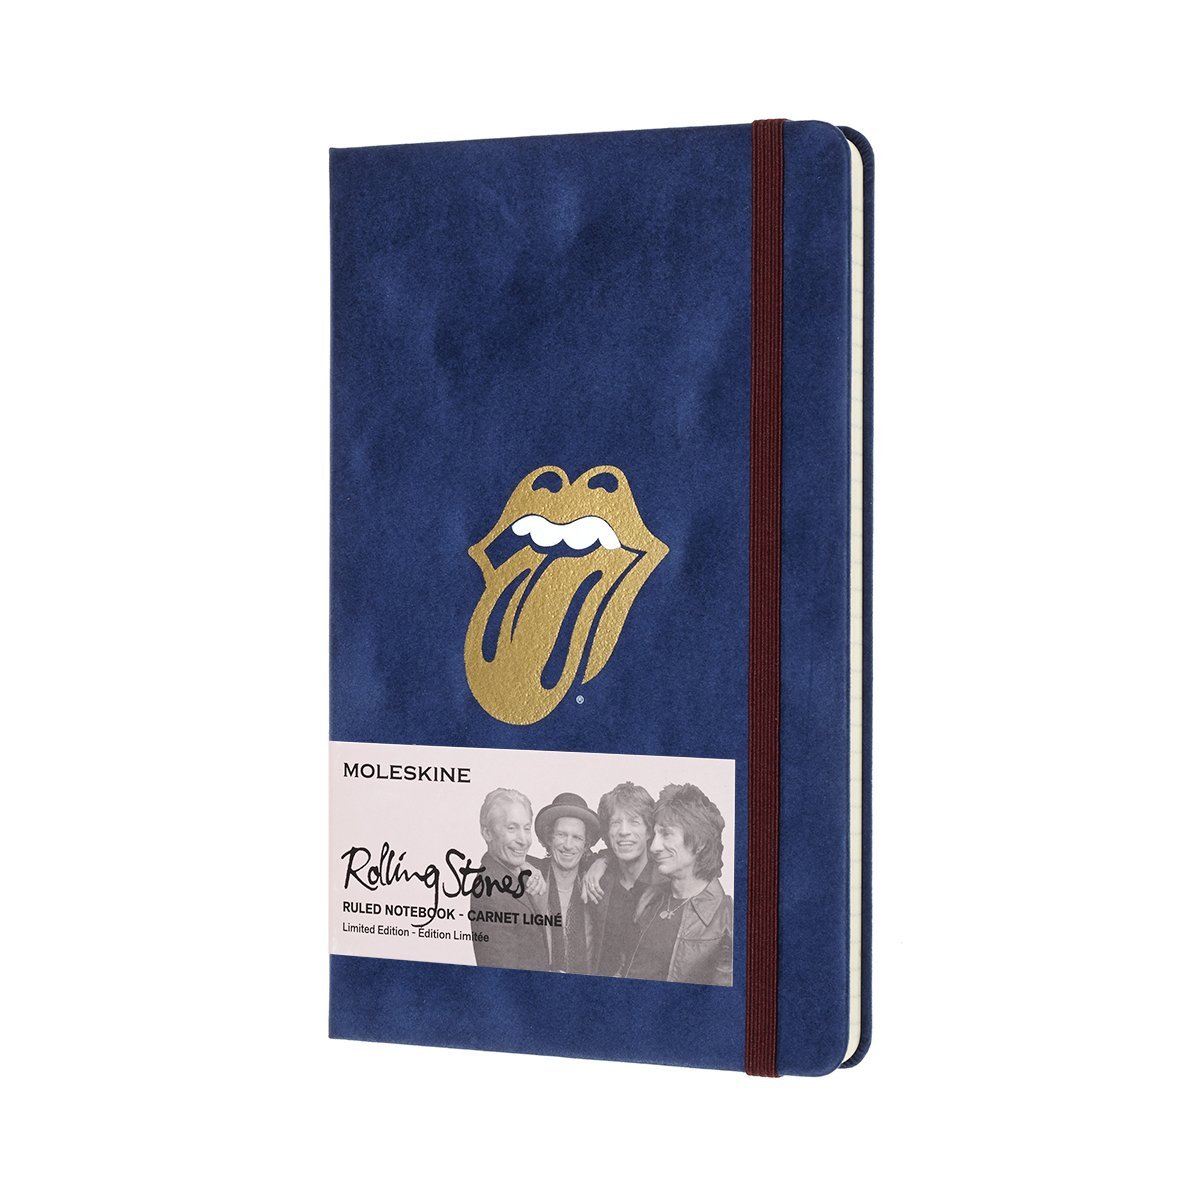 Jurnal Moleskine - Rolling Stones Limited Edition, Flock, Large, Ruled, Hard Cover | Moleskine